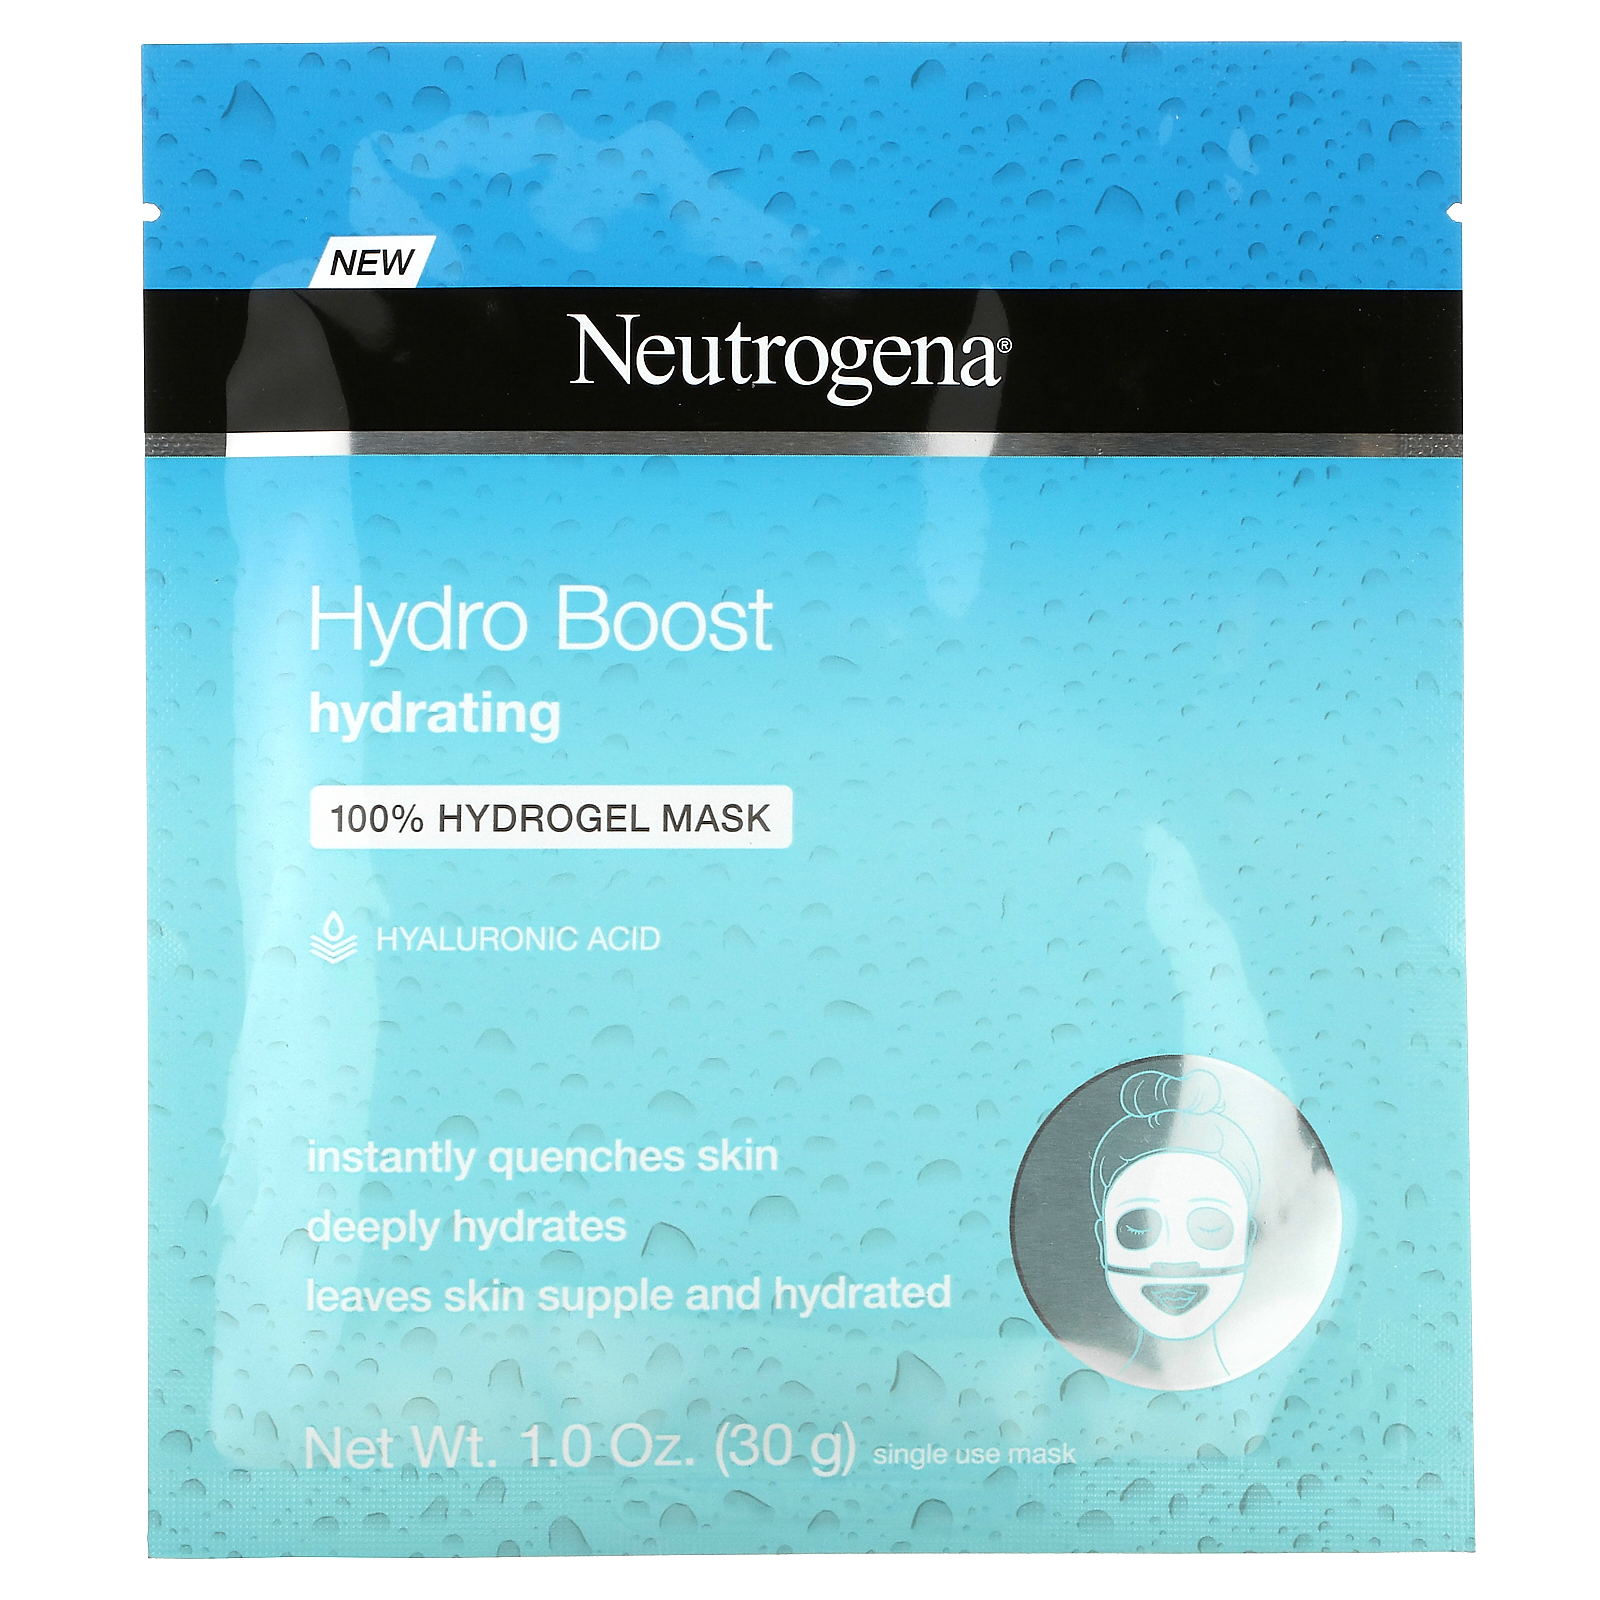 Neutrogena Hydro Boost Hydrating Beauty 保障できる Mask 30 Single oz 1 Use g 日本全国送料無料